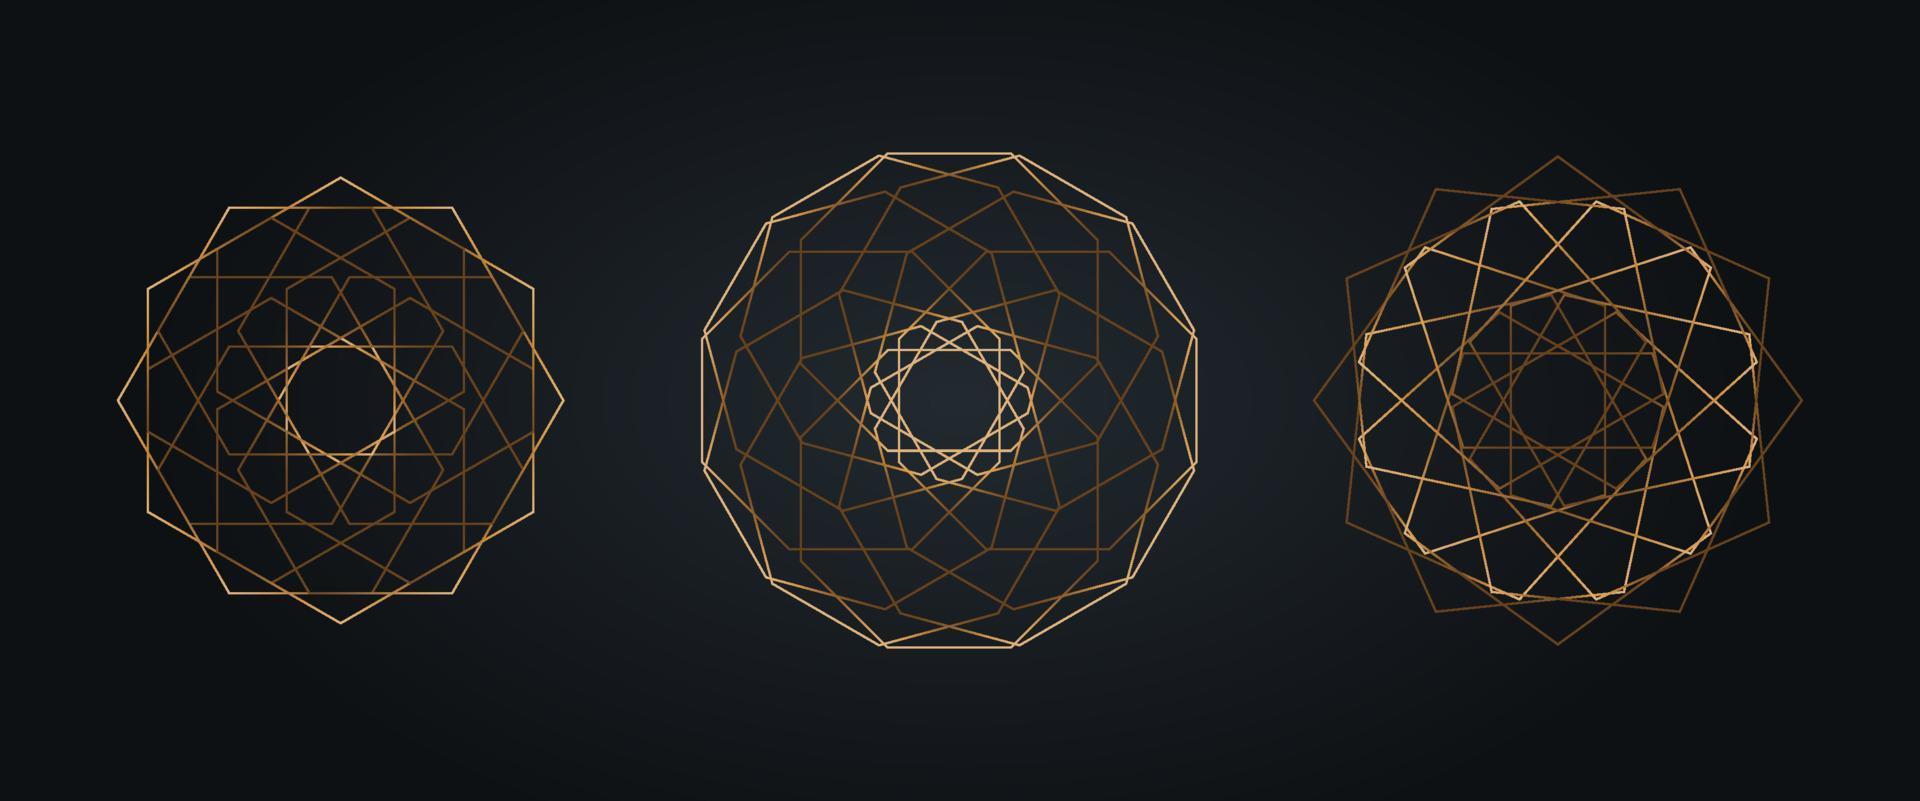 definir mandala sagrada de ouro, conceito de logotipo de mandala de círculo dourado geométrico abstrato luxuoso conjunto de pacotes, geometria sagrada isolada em fundo preto vetor